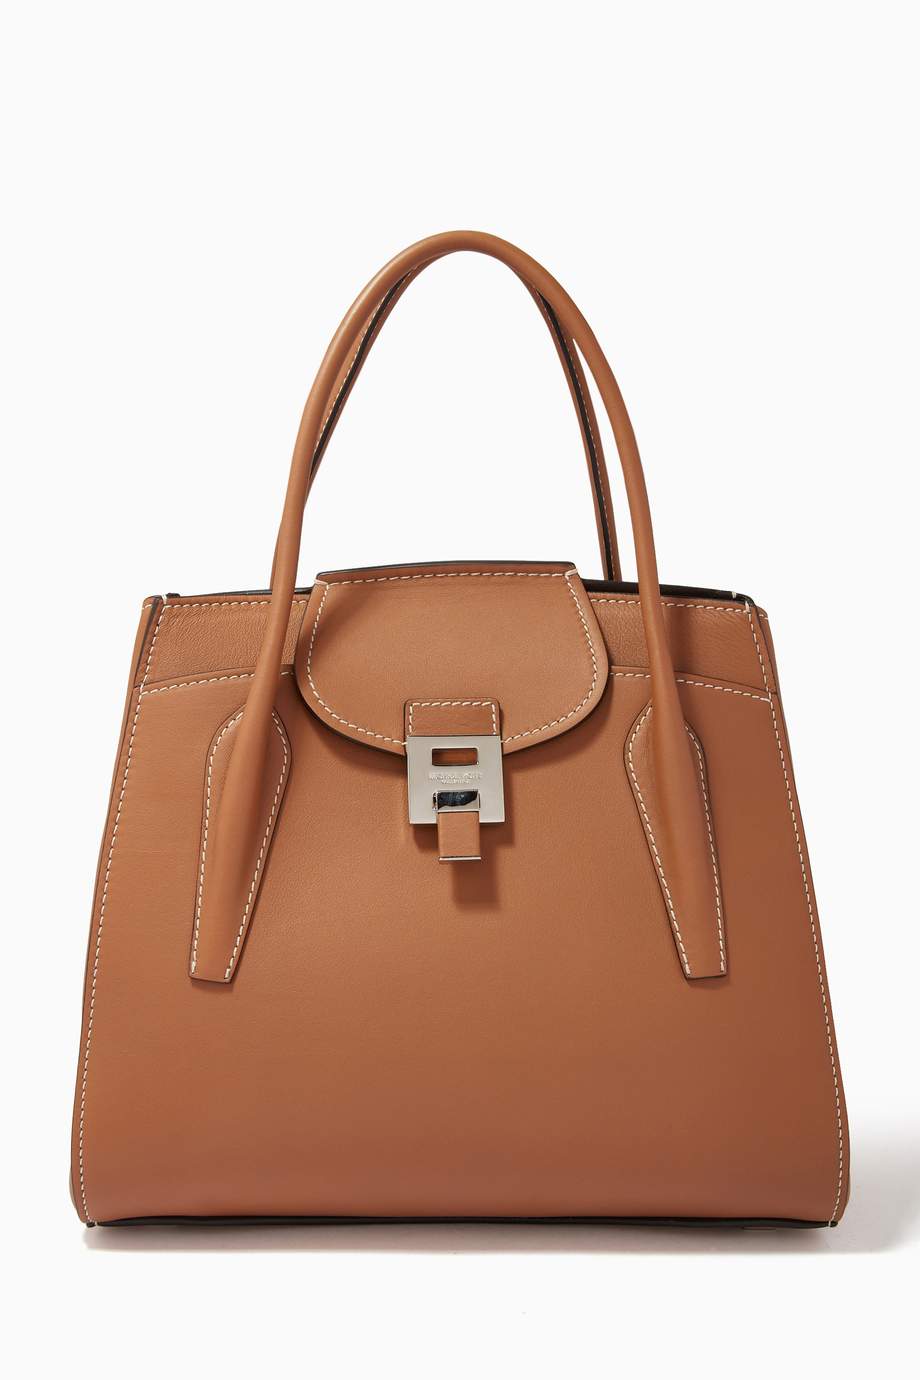 Shop Michael Kors Brown MKC x 007 Bancroft Satchel Bag in Leather for Women | Ounass UAE